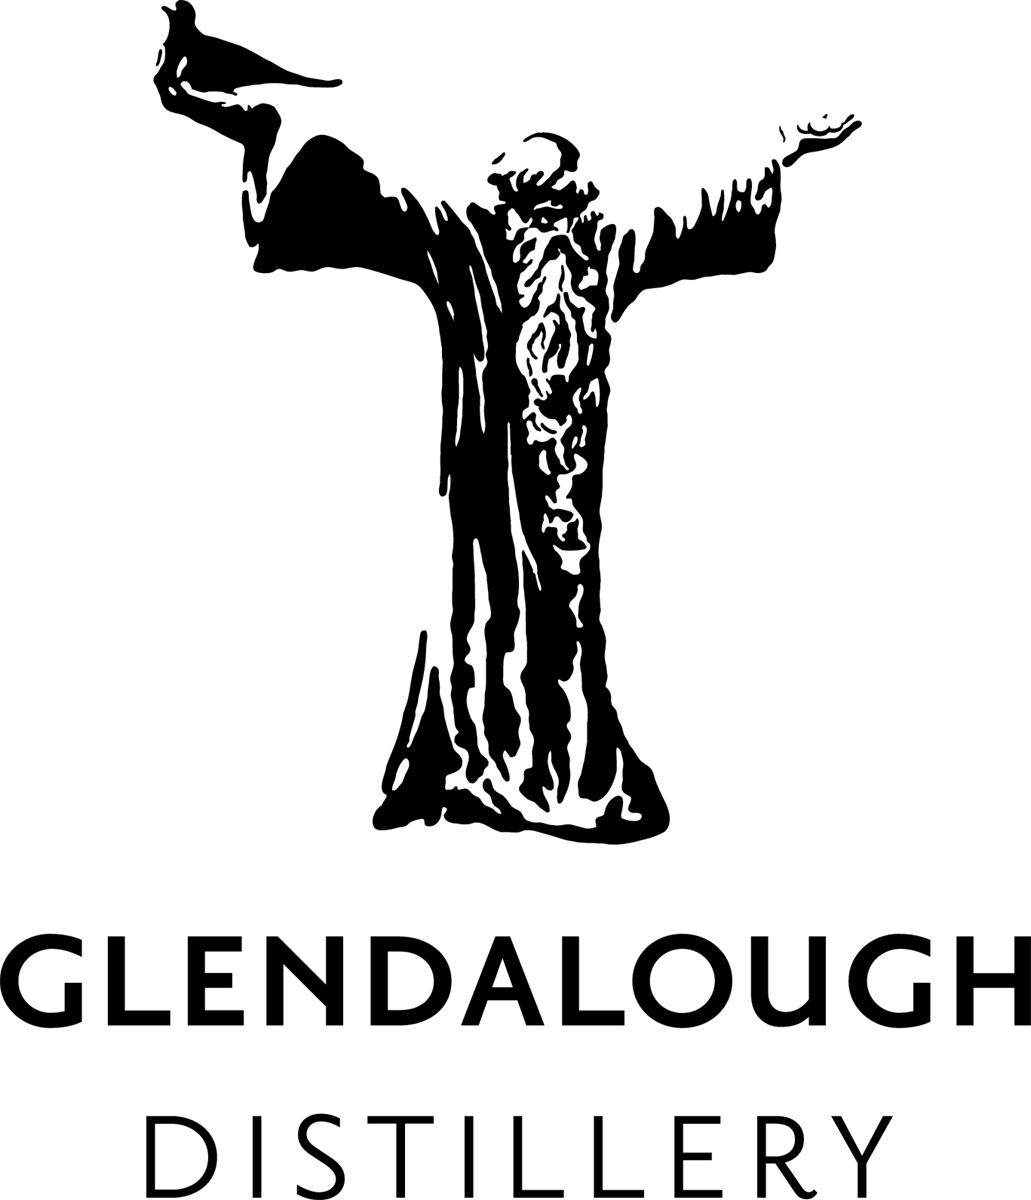 GLENDALOUGH